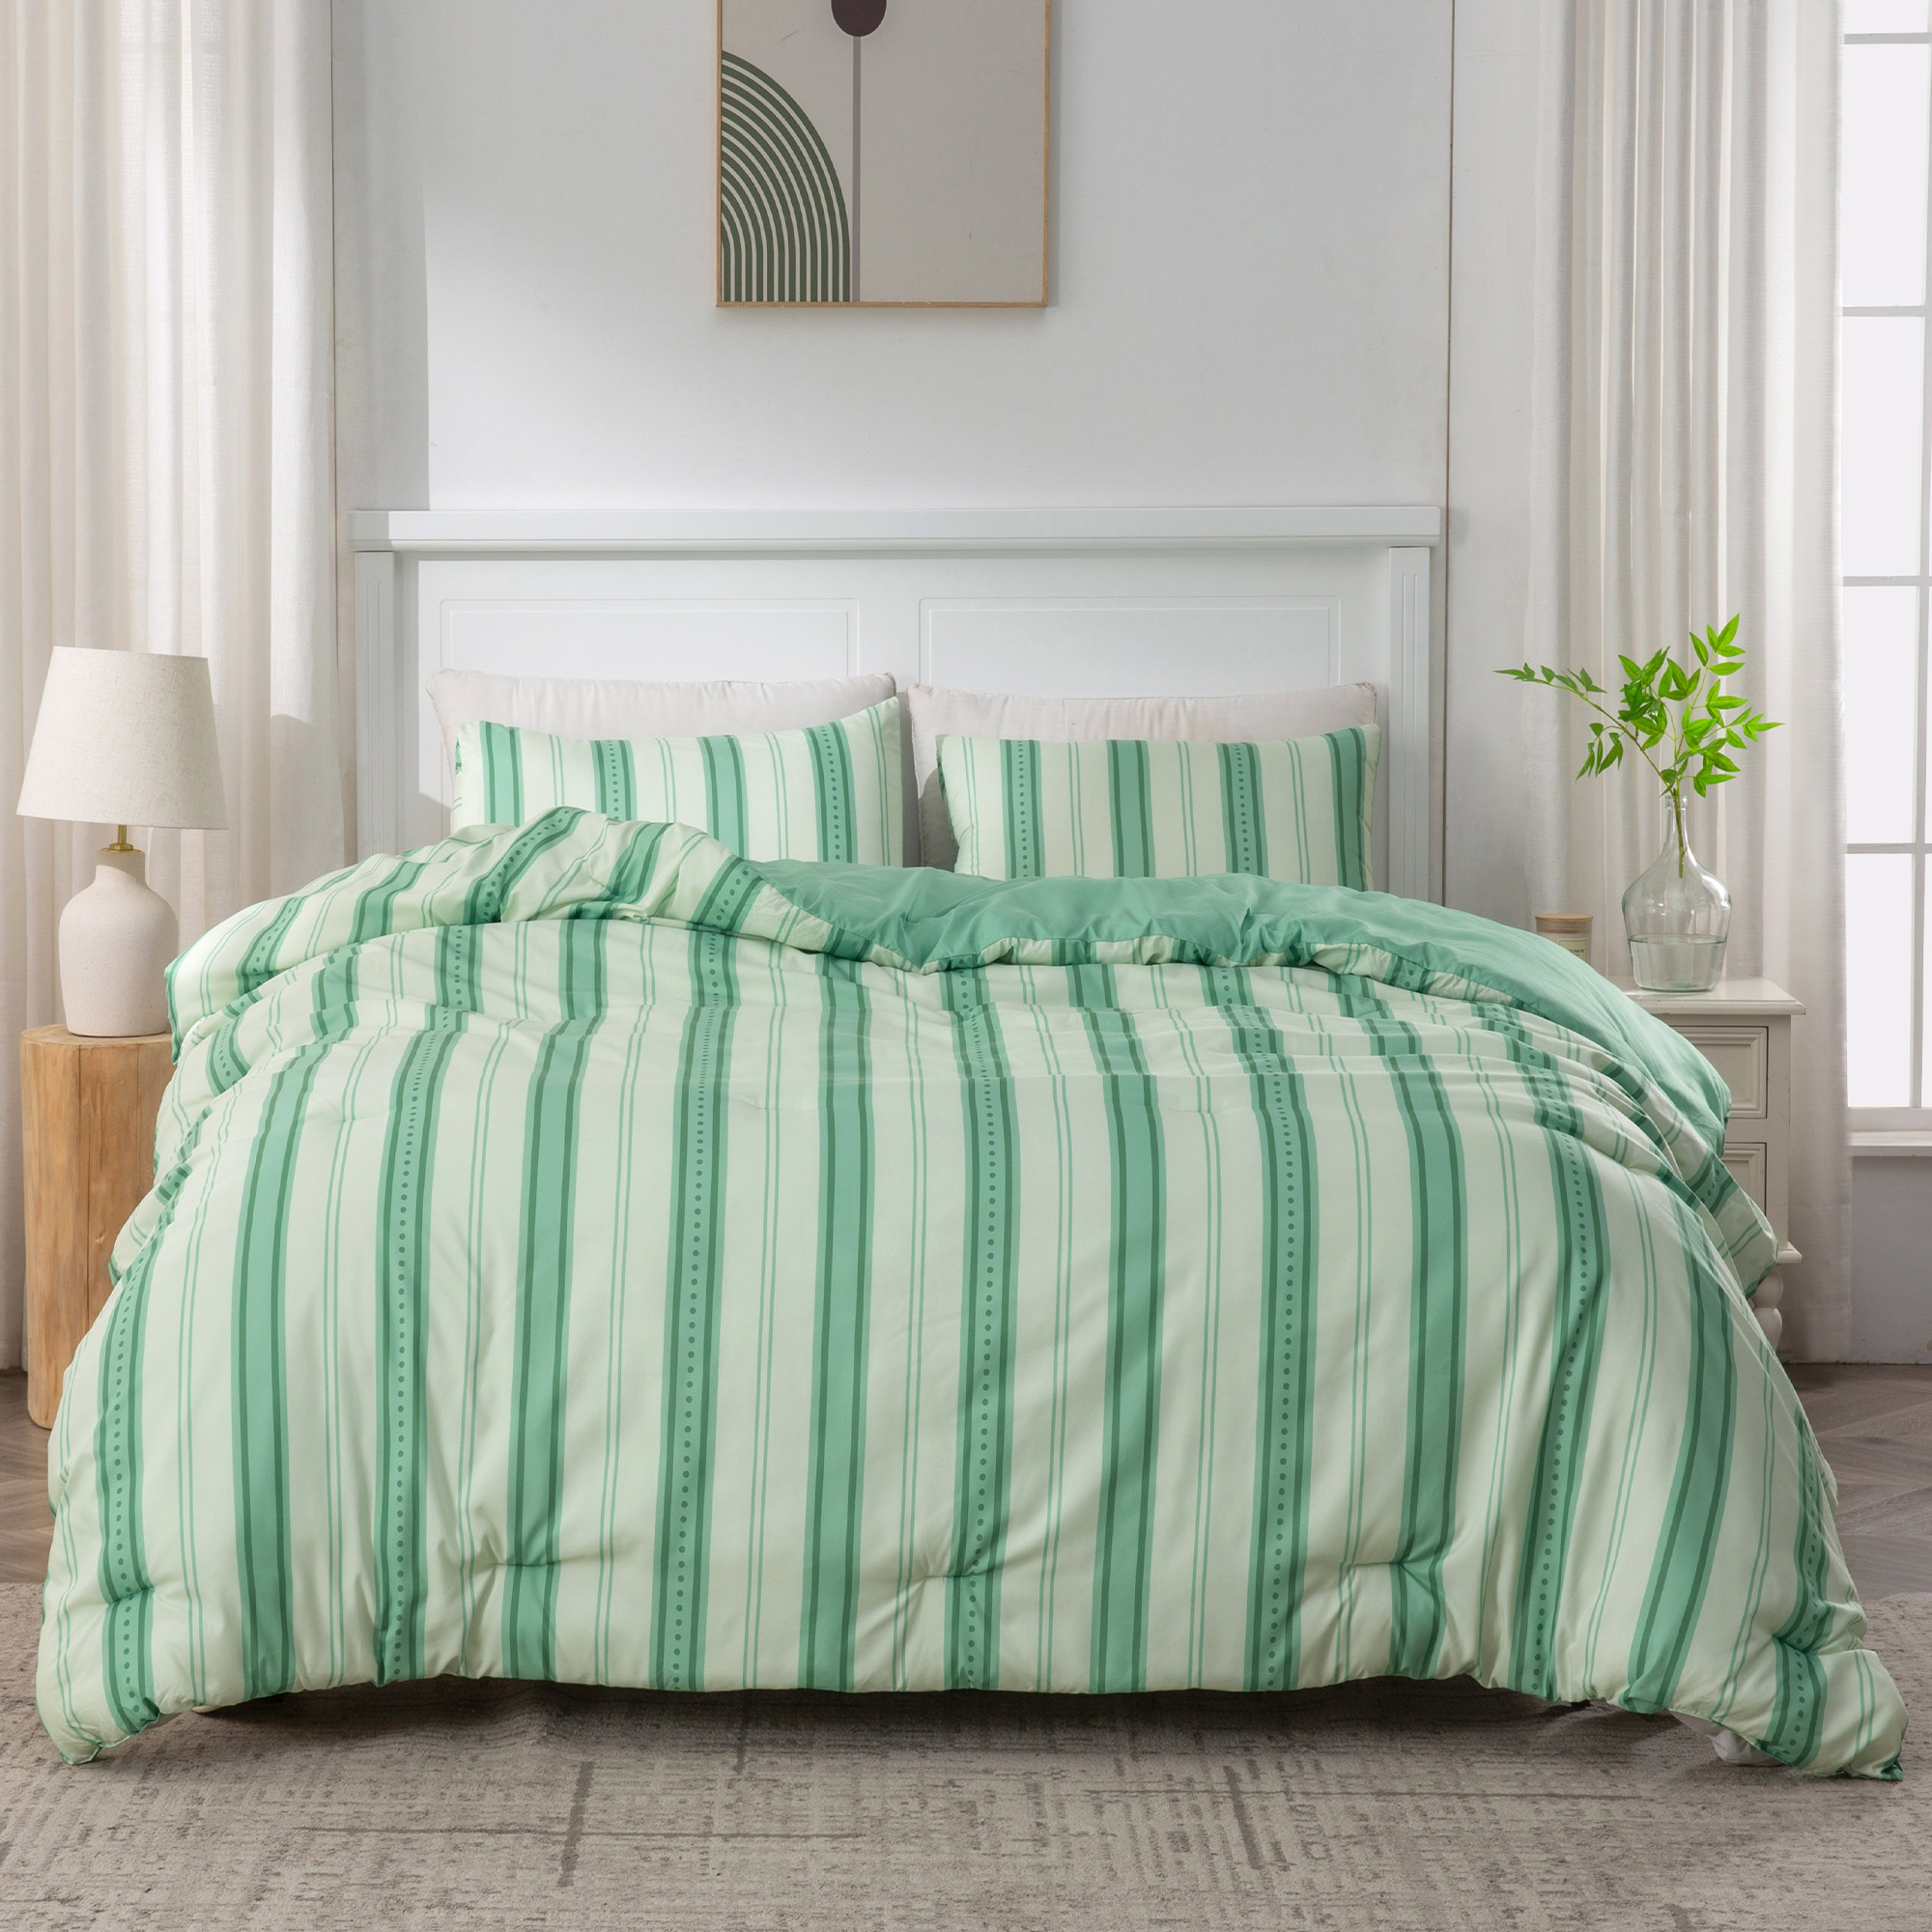 Ultra Soft Reversible Printed Stripe Microfiber Comforter Set - All-Season Warmth, Green - Full/Queen